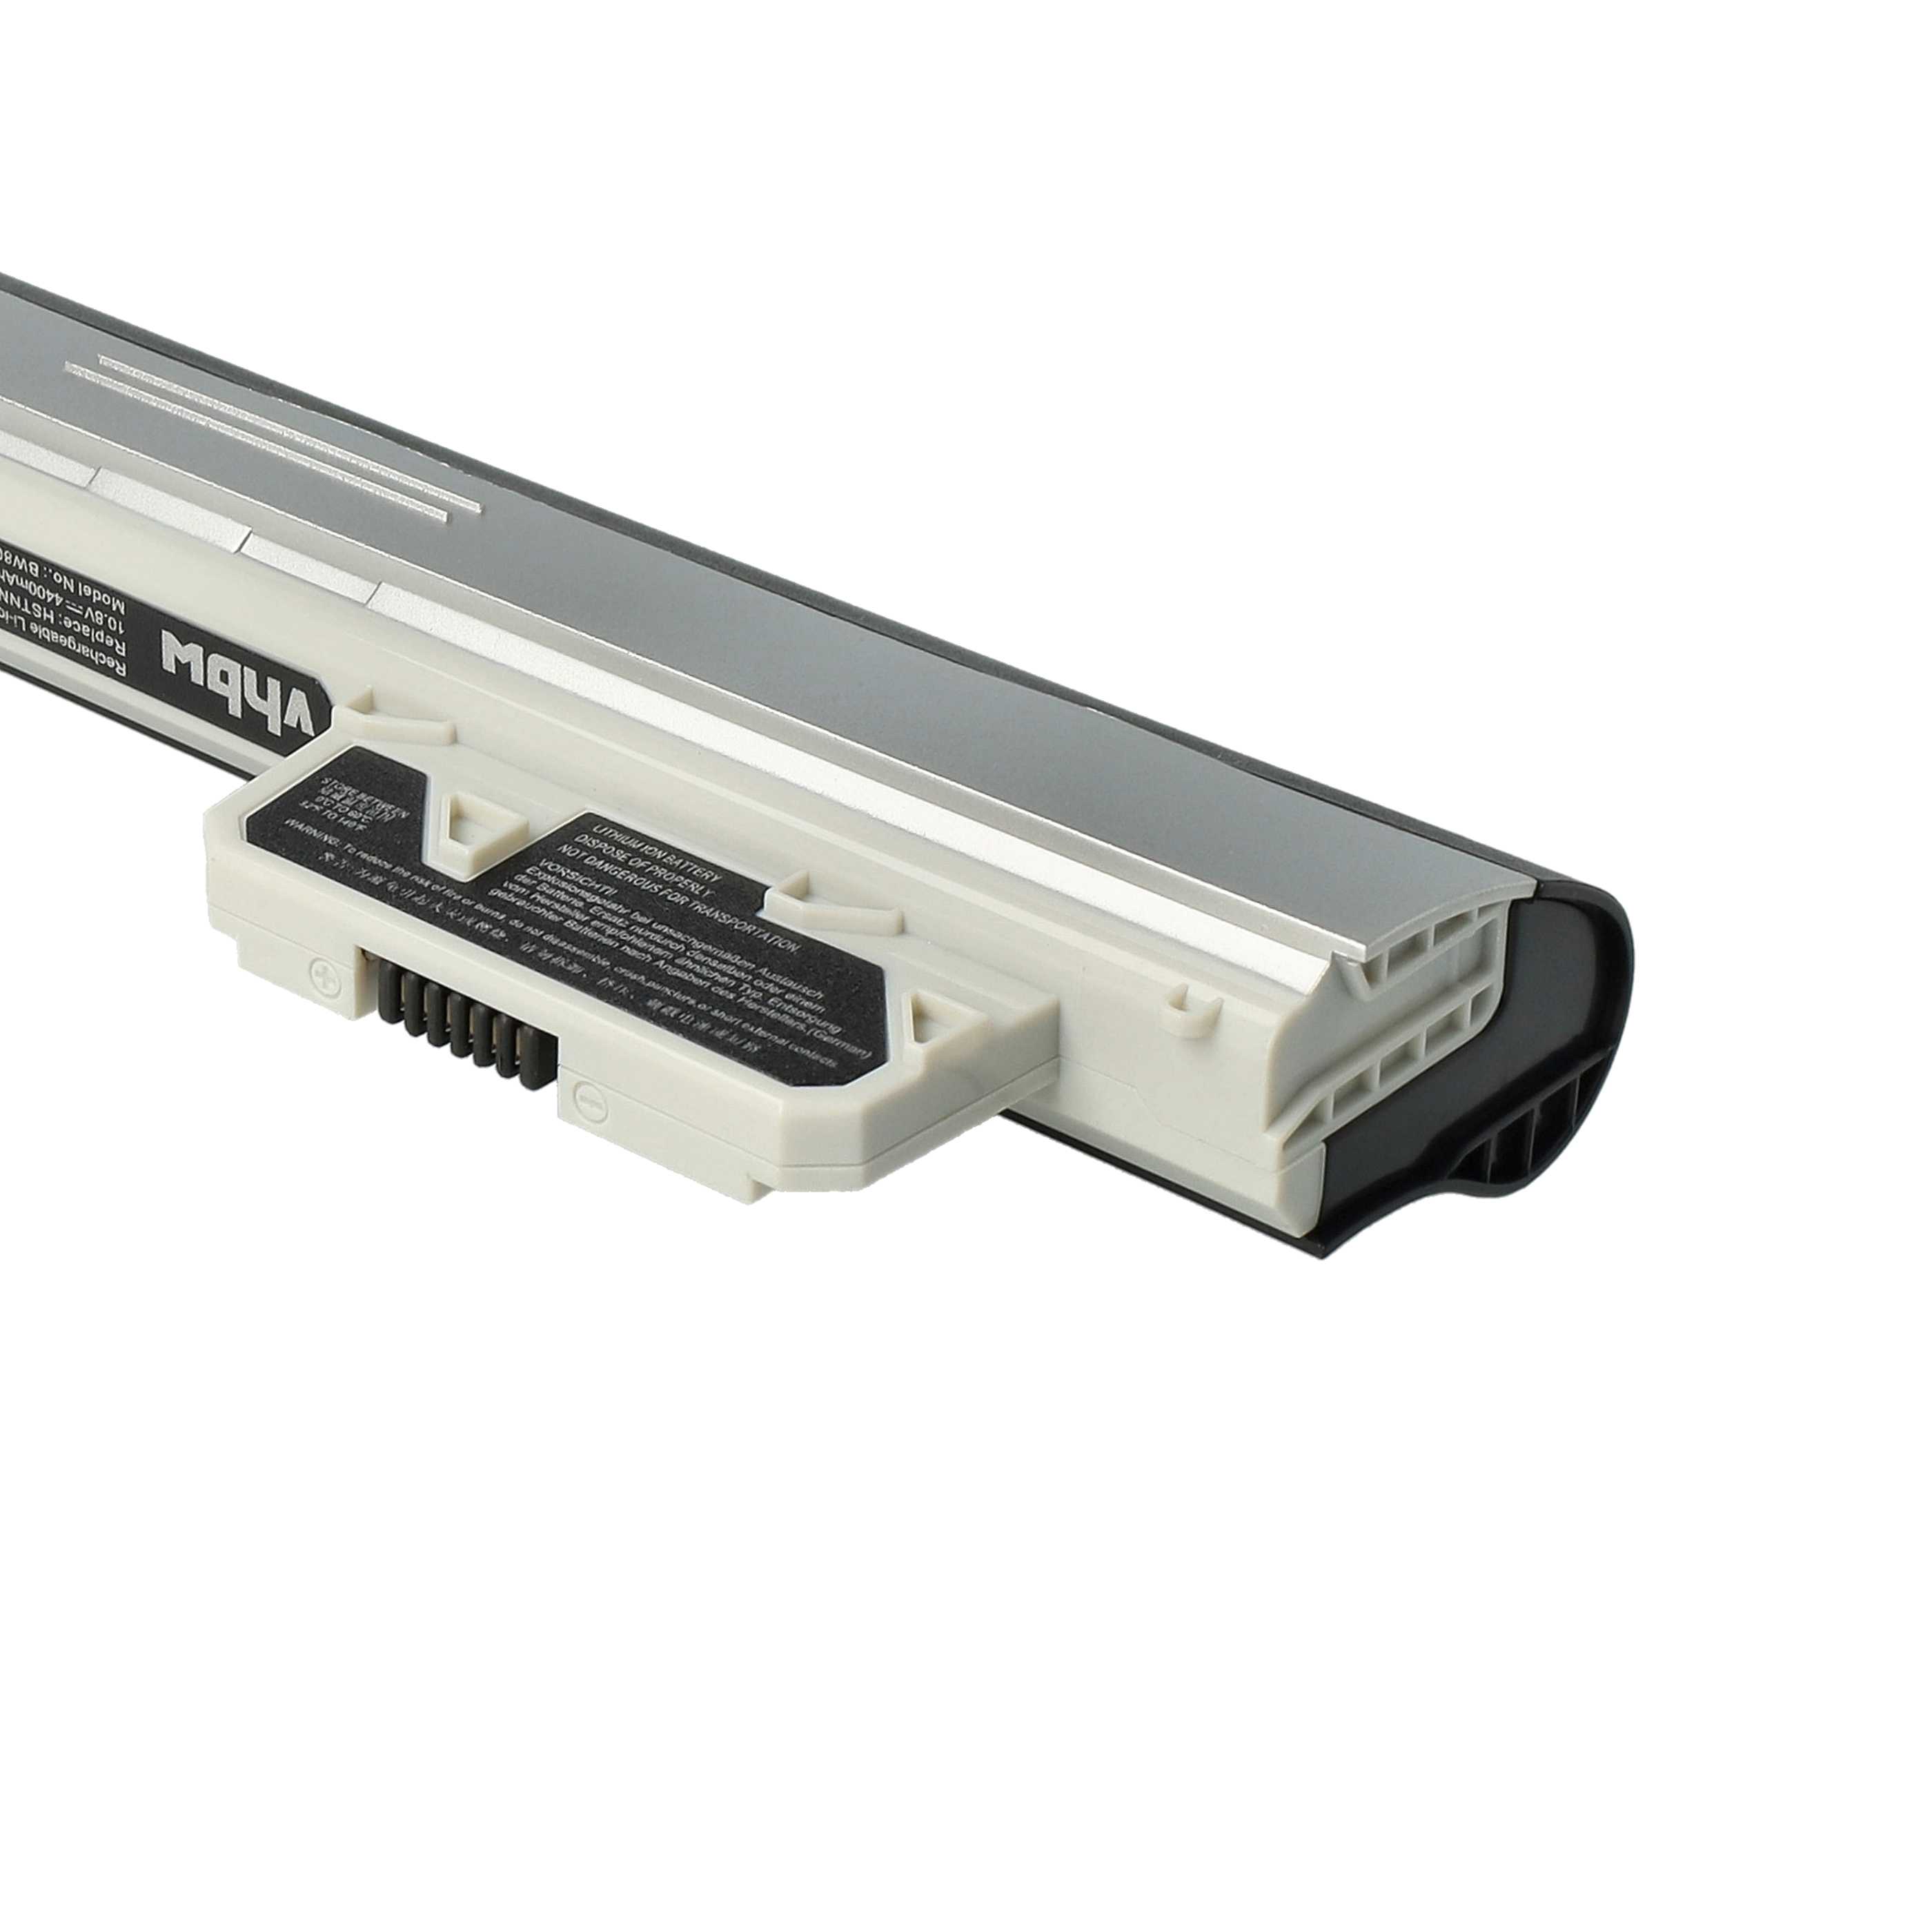 Akumulator do laptopa zamiennik HP 628419-001, 626869-851, 626869-321 - 4400 mAh 11,1 V Li-Ion, srebrnoszary